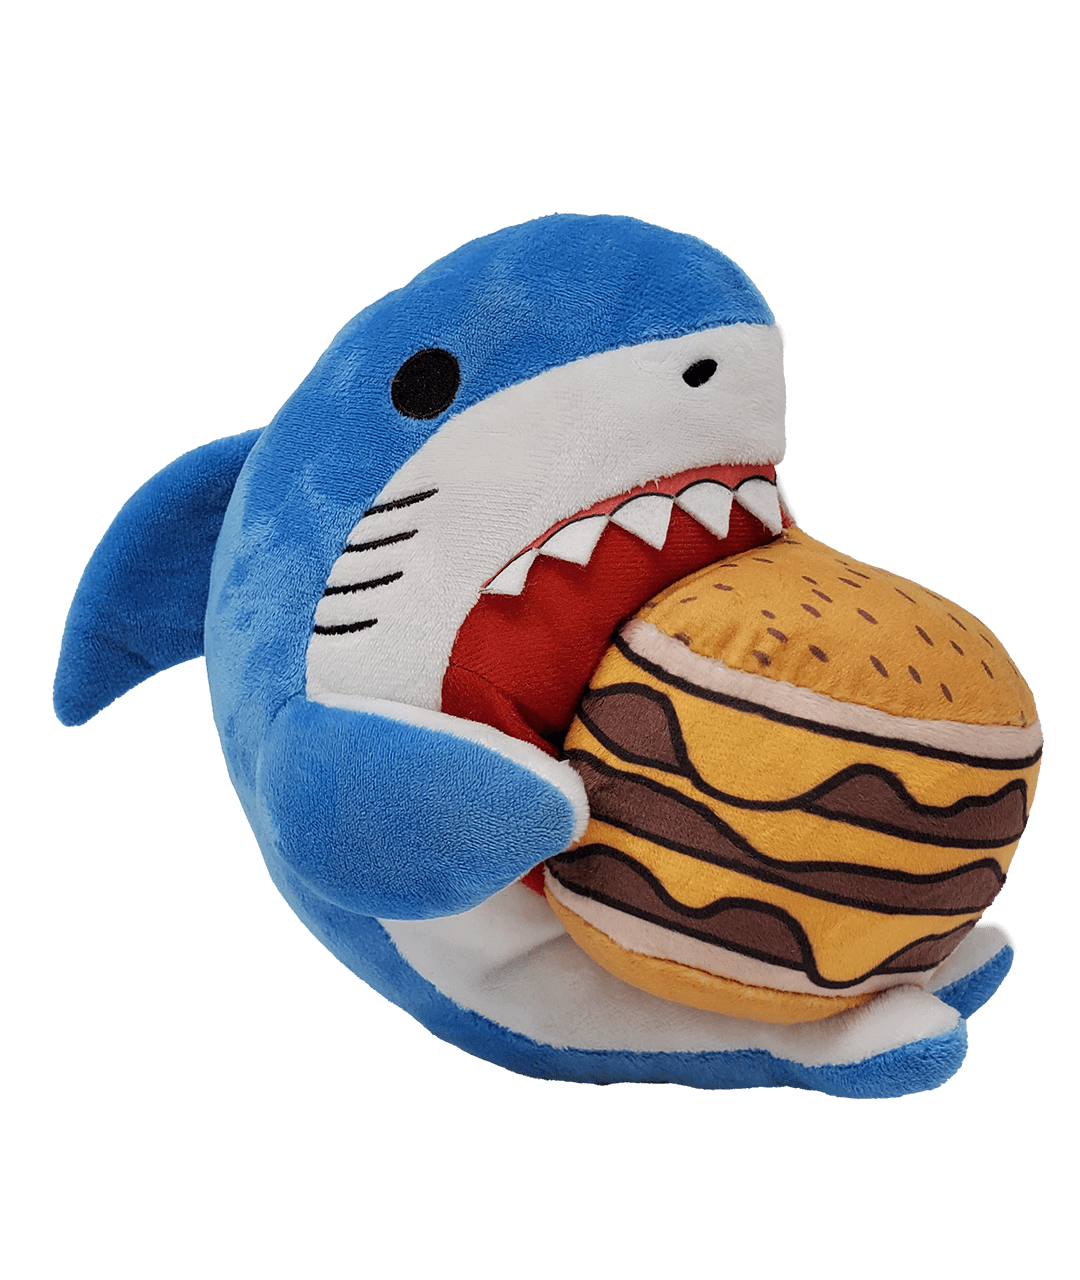 H2o Delirious Cheeseburger Shark Plushie